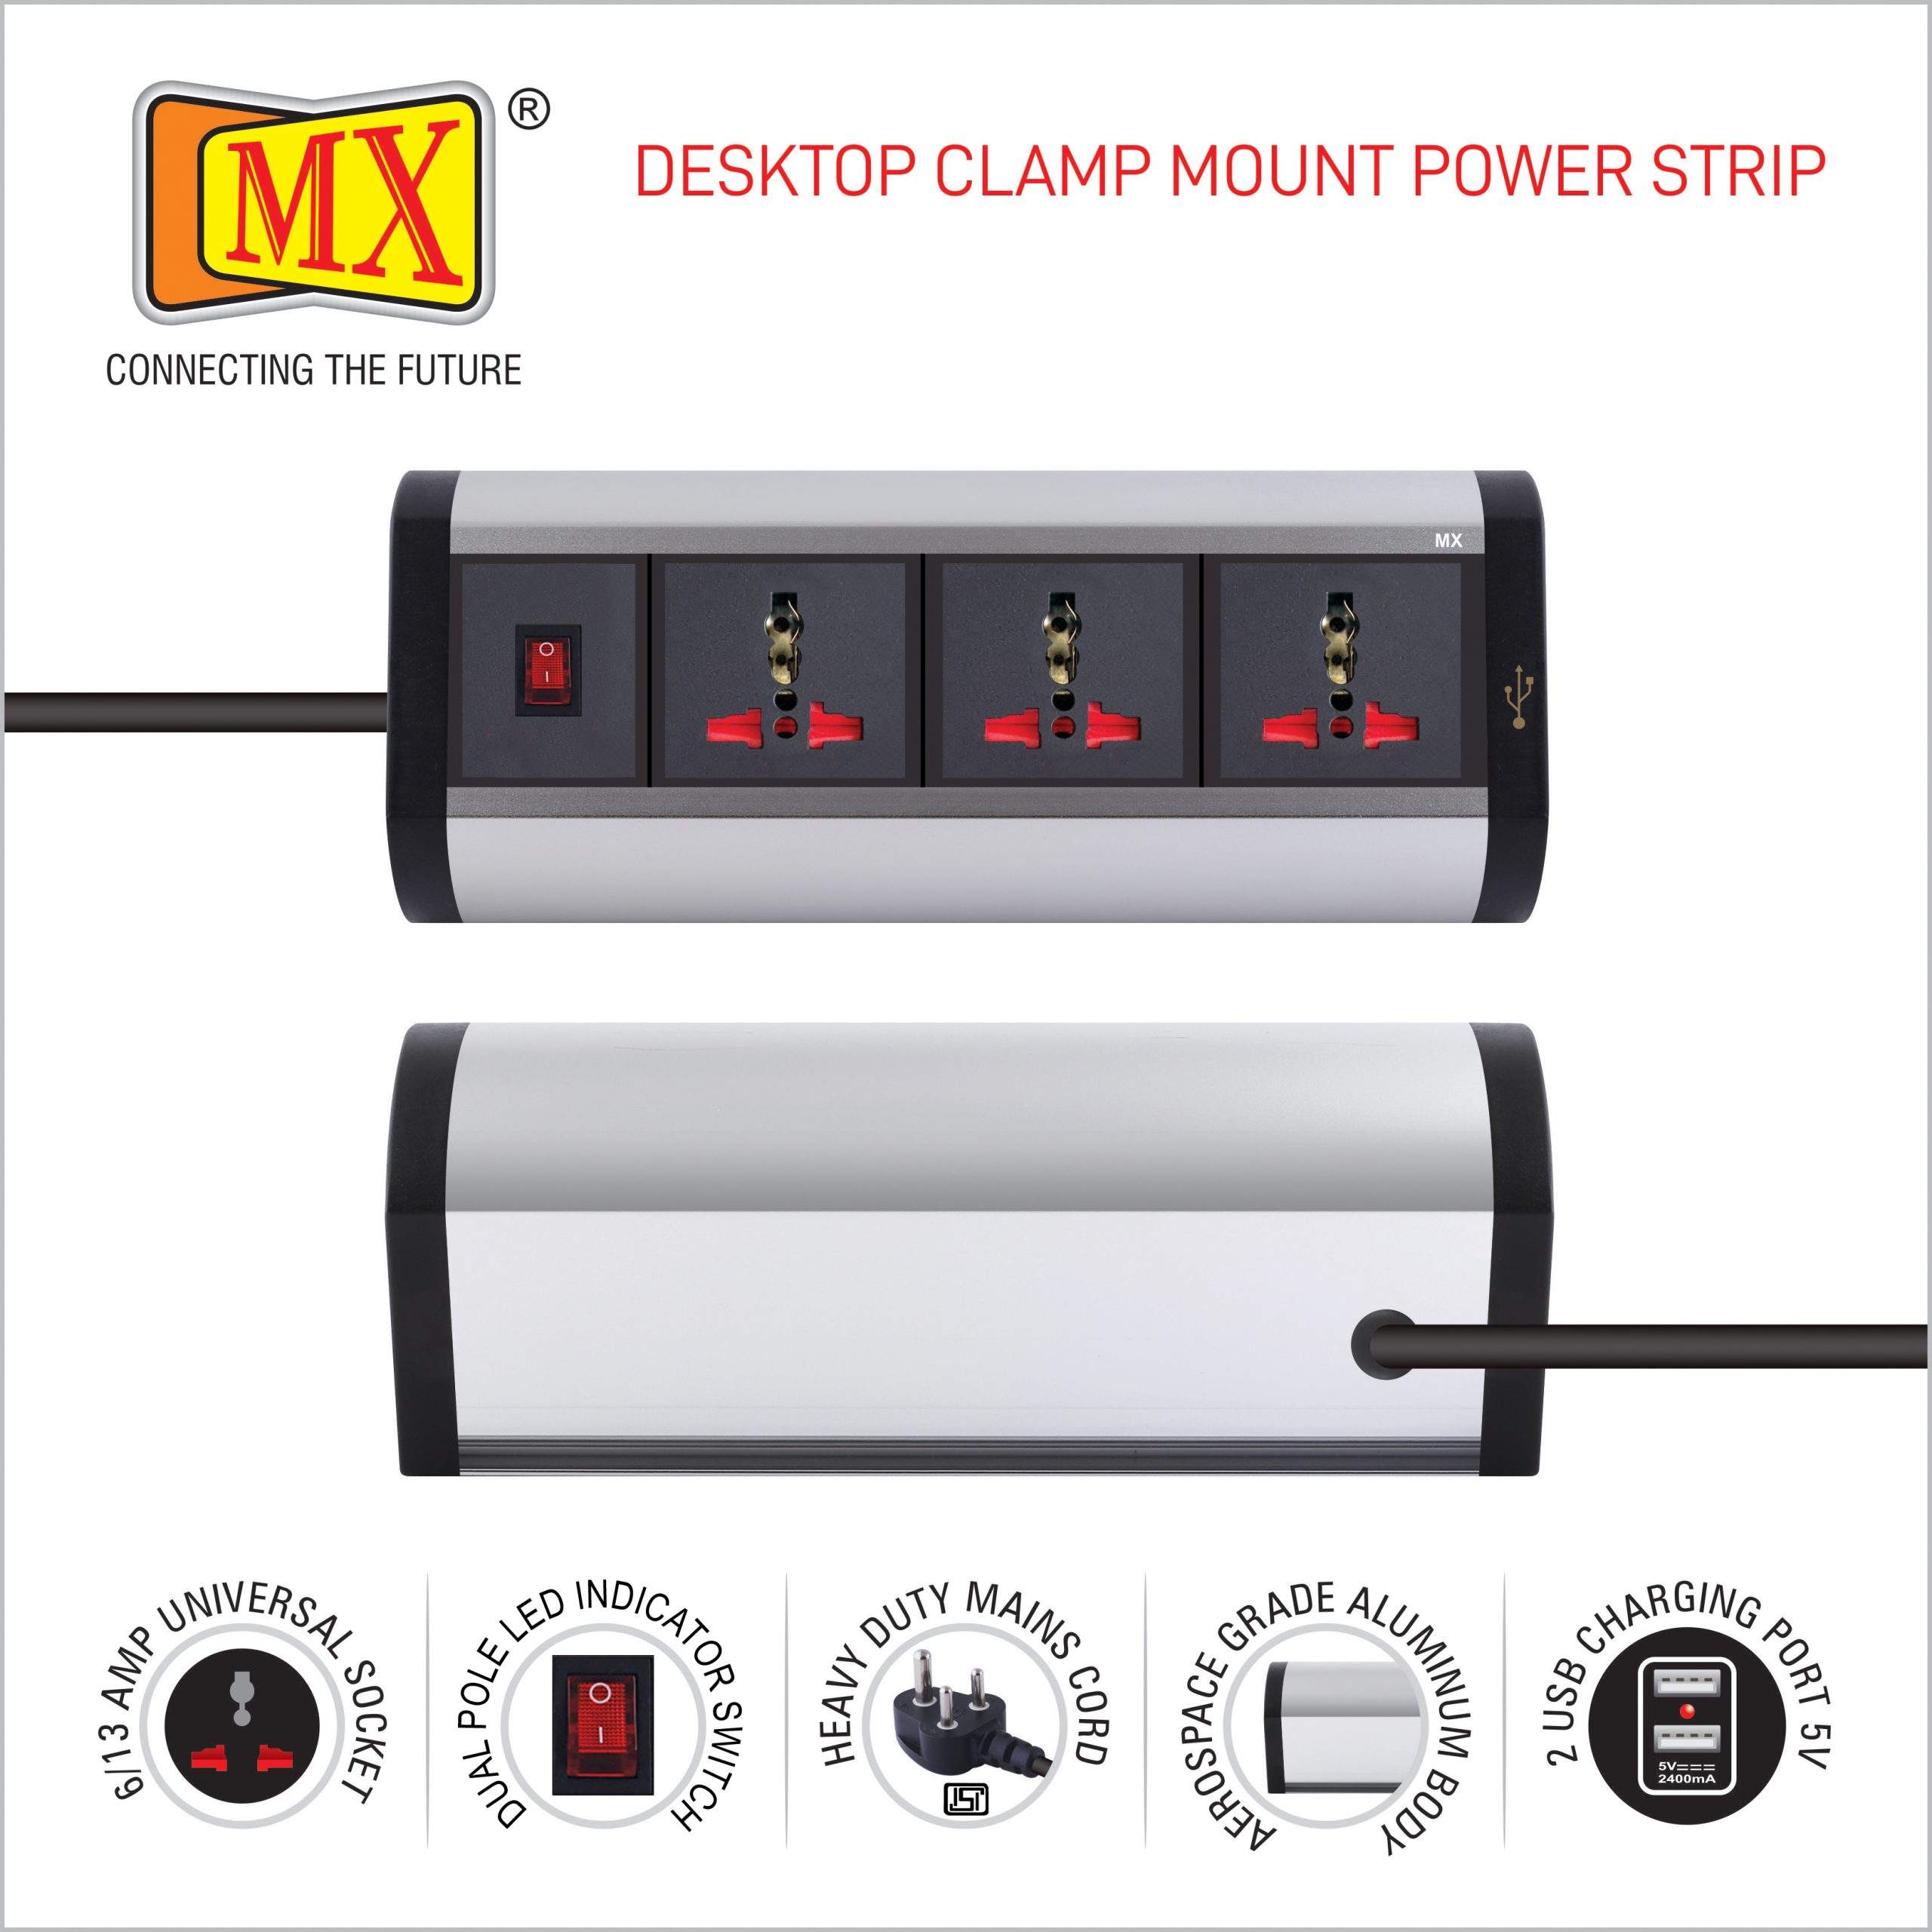 MX POWER TRACK WALL / TABLE BRACKET MOUNT (32 AMP 250V) – 1.0 MTR